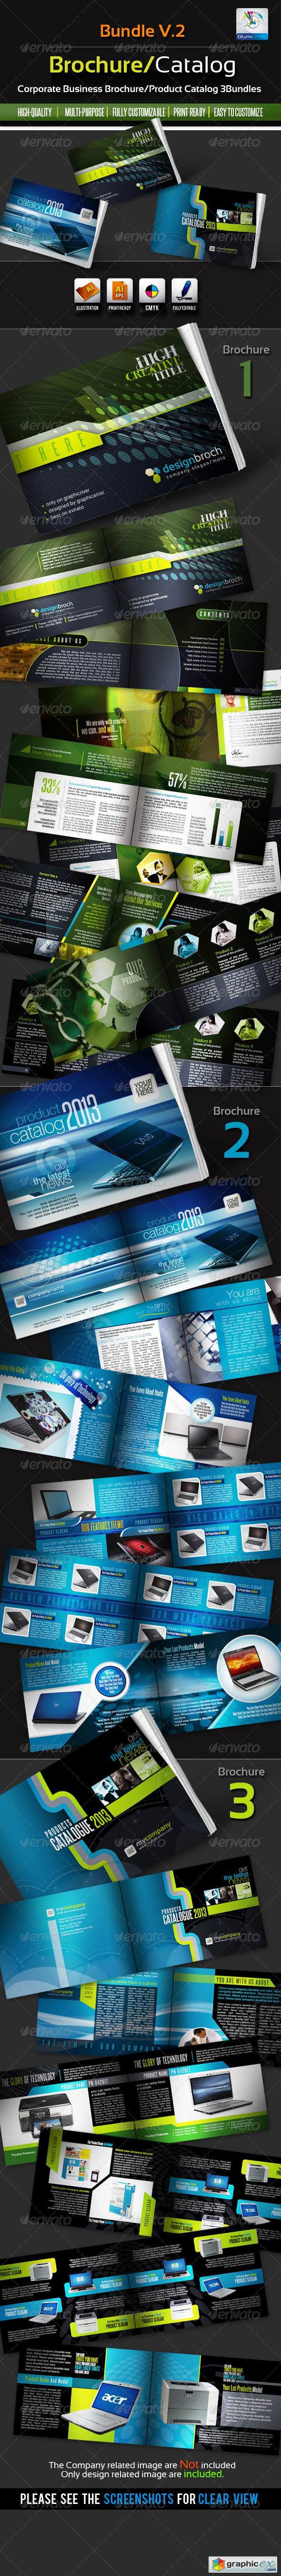 Corporate Brochure/Catalogue Bundles v.2